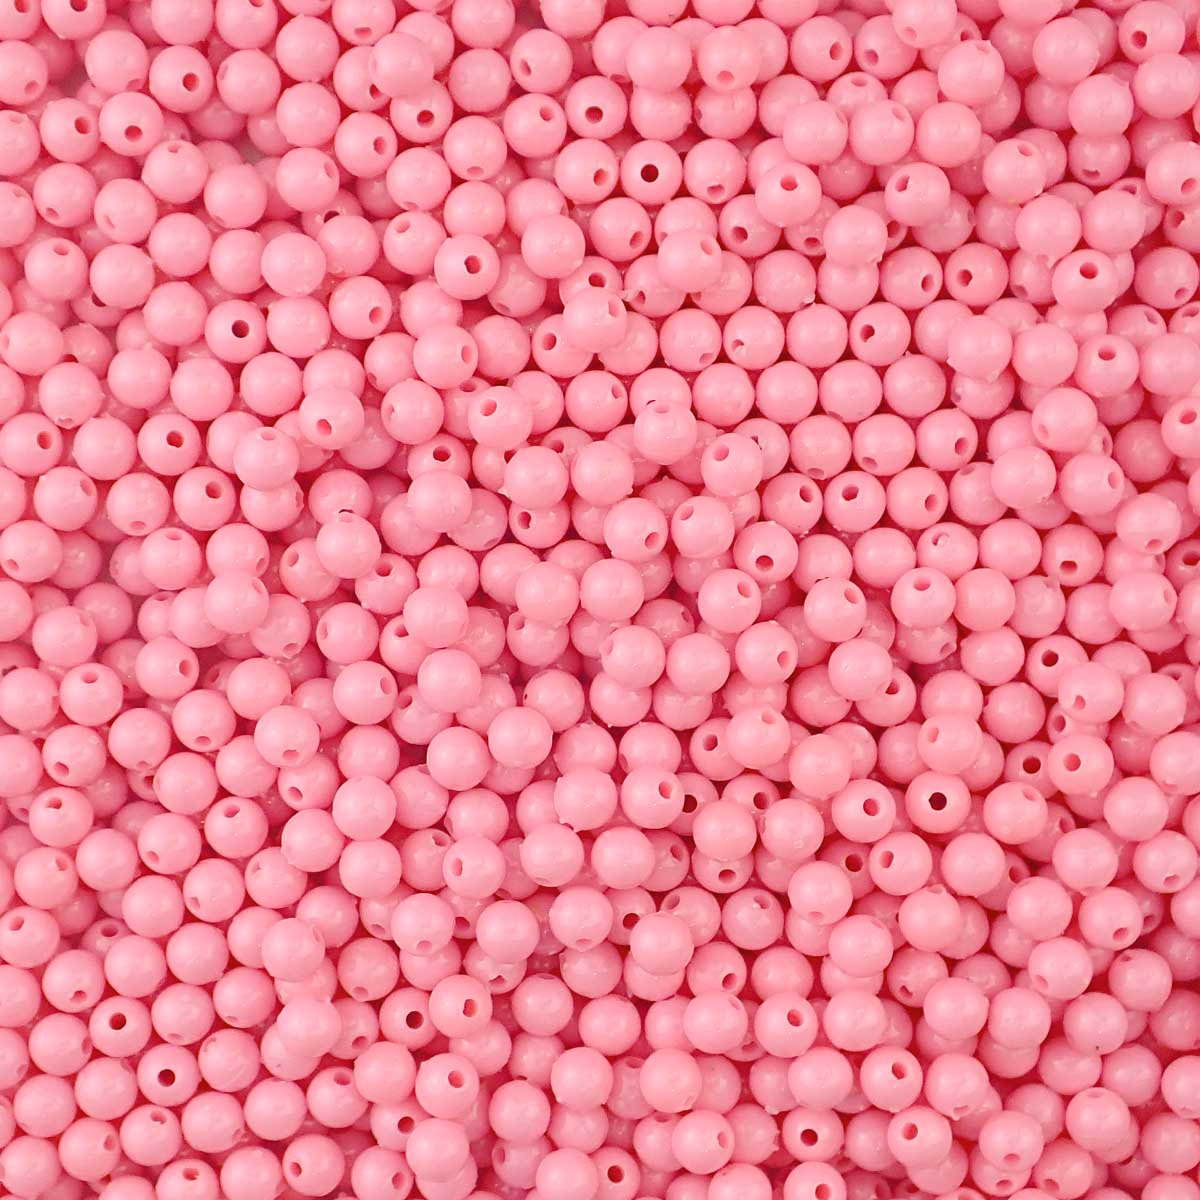  BeadTin Pink Glow 6mm Round Craft Beads (500pcs) : Arts, Crafts  & Sewing